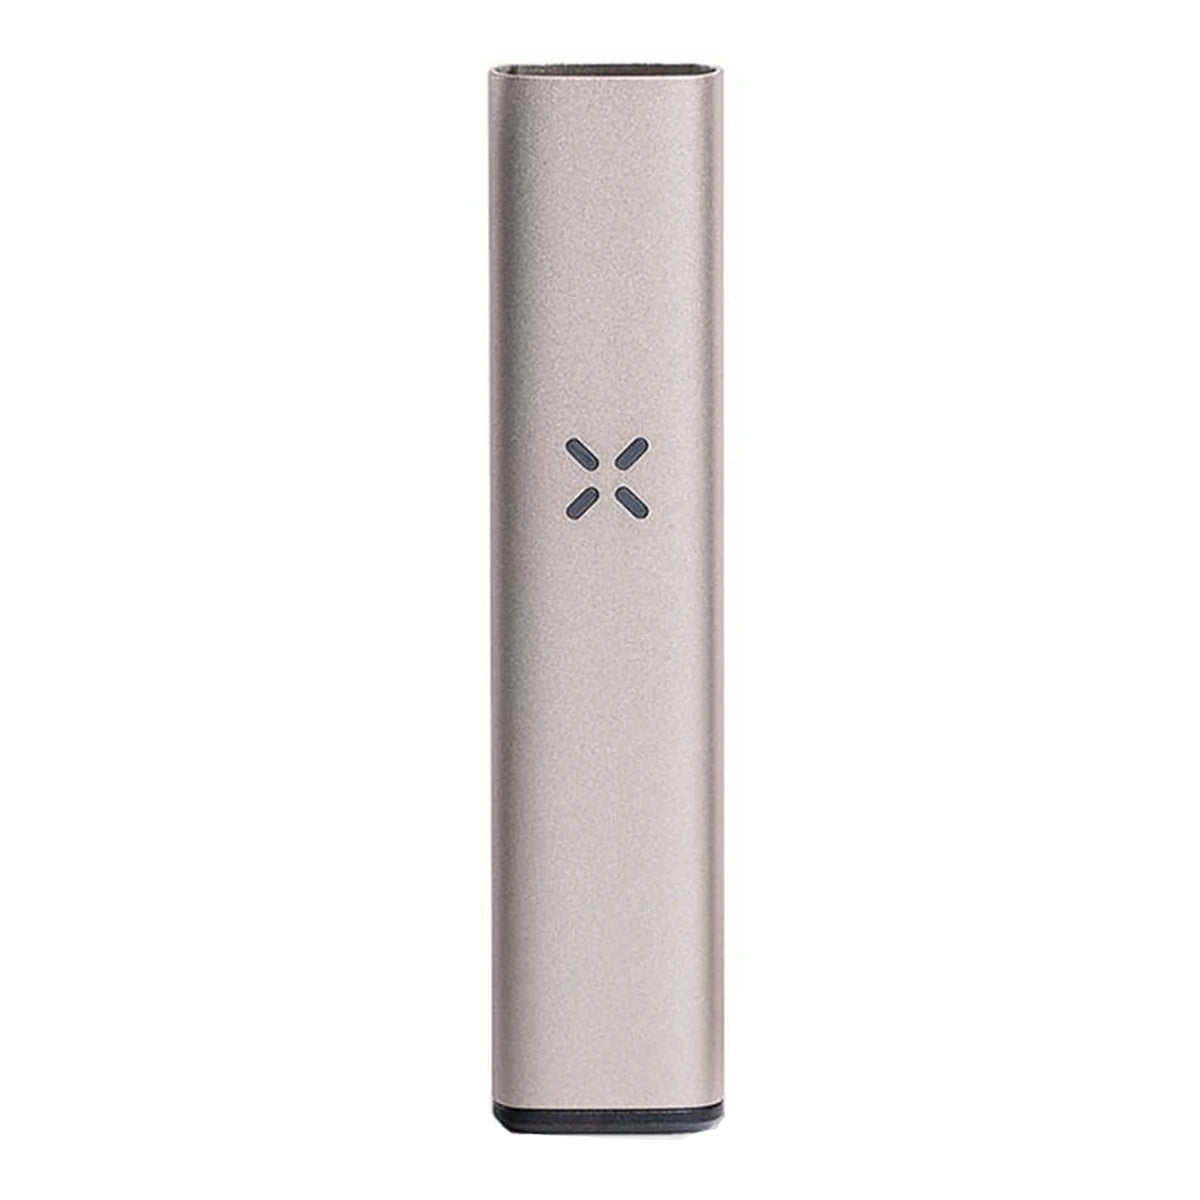 PAX Era Pro Device - Smoker's Emporium